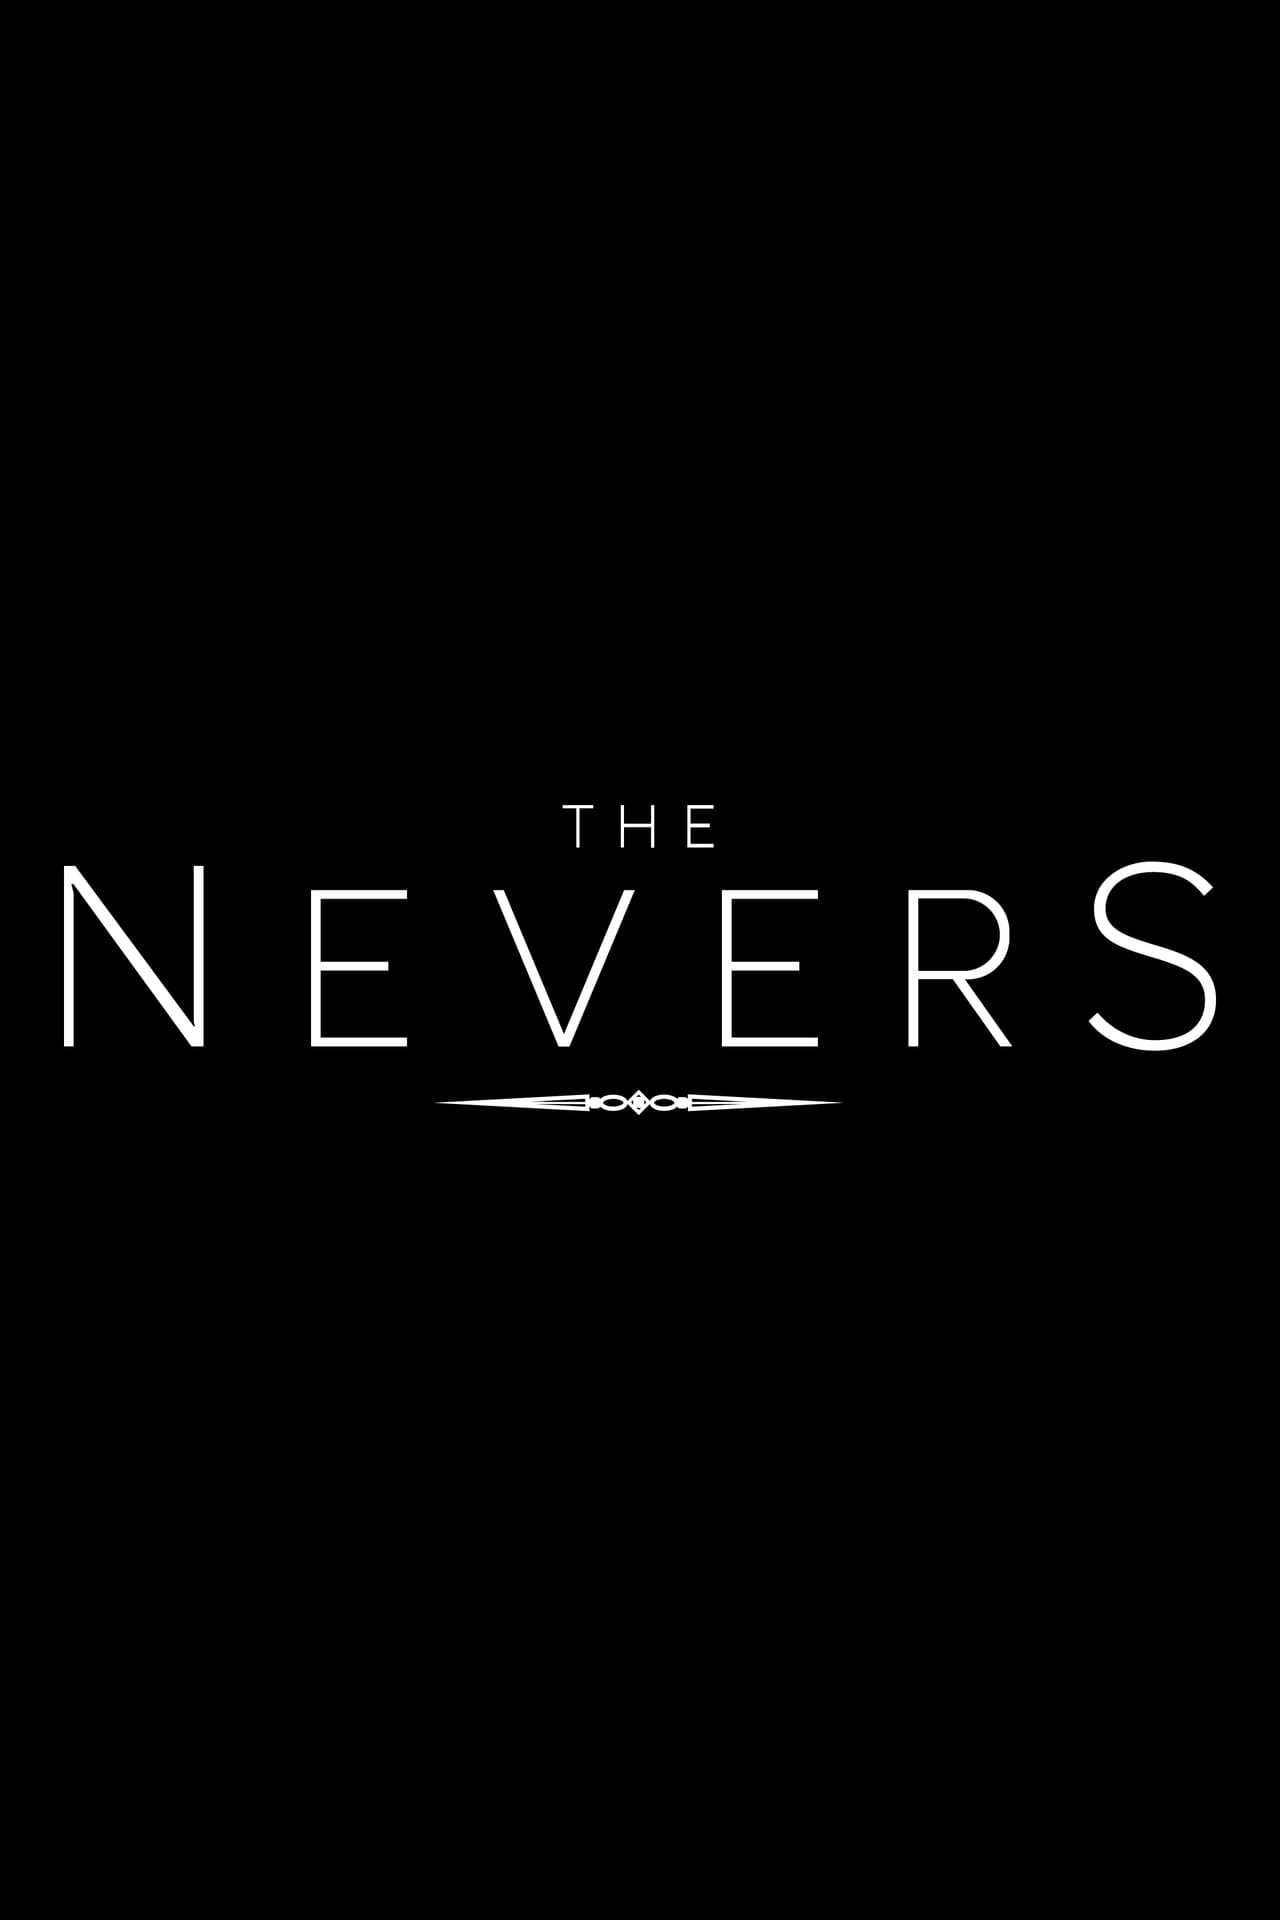 The Nevers (season 1)